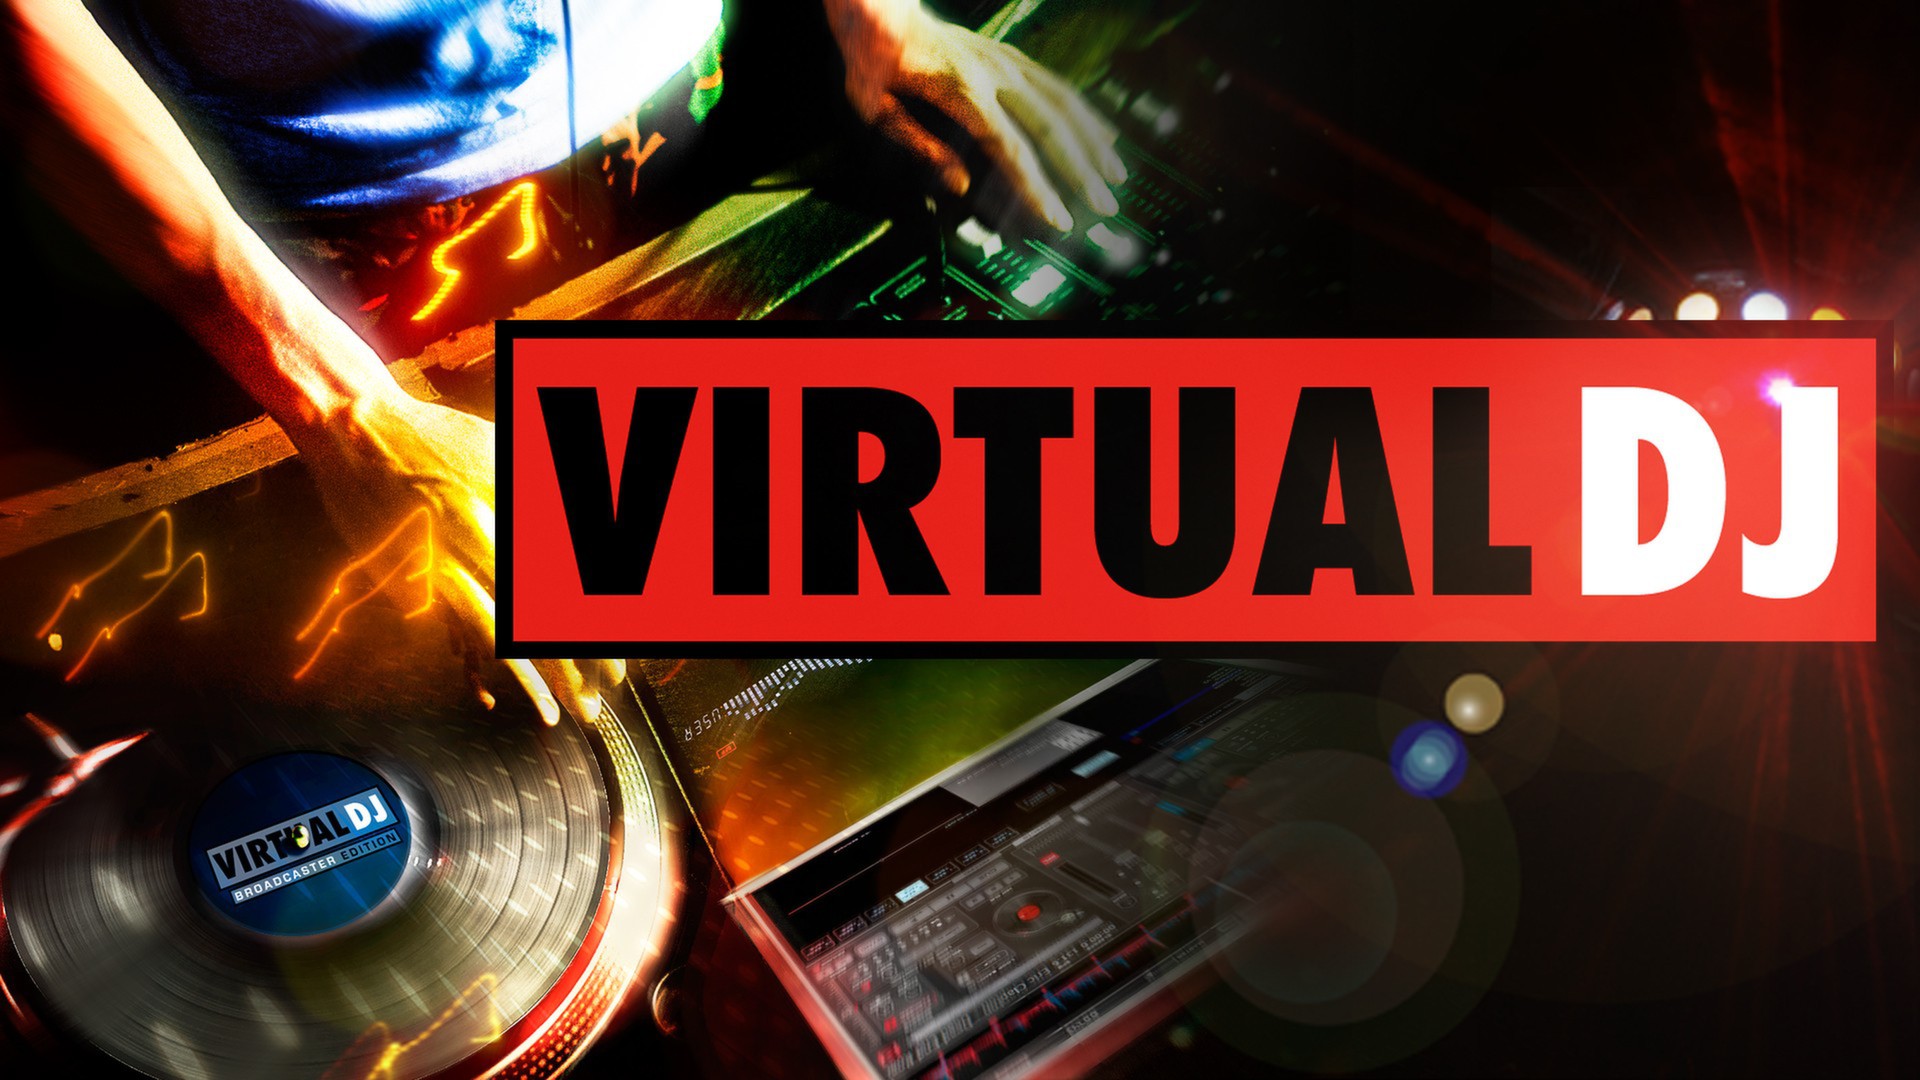 virtual dj download free online